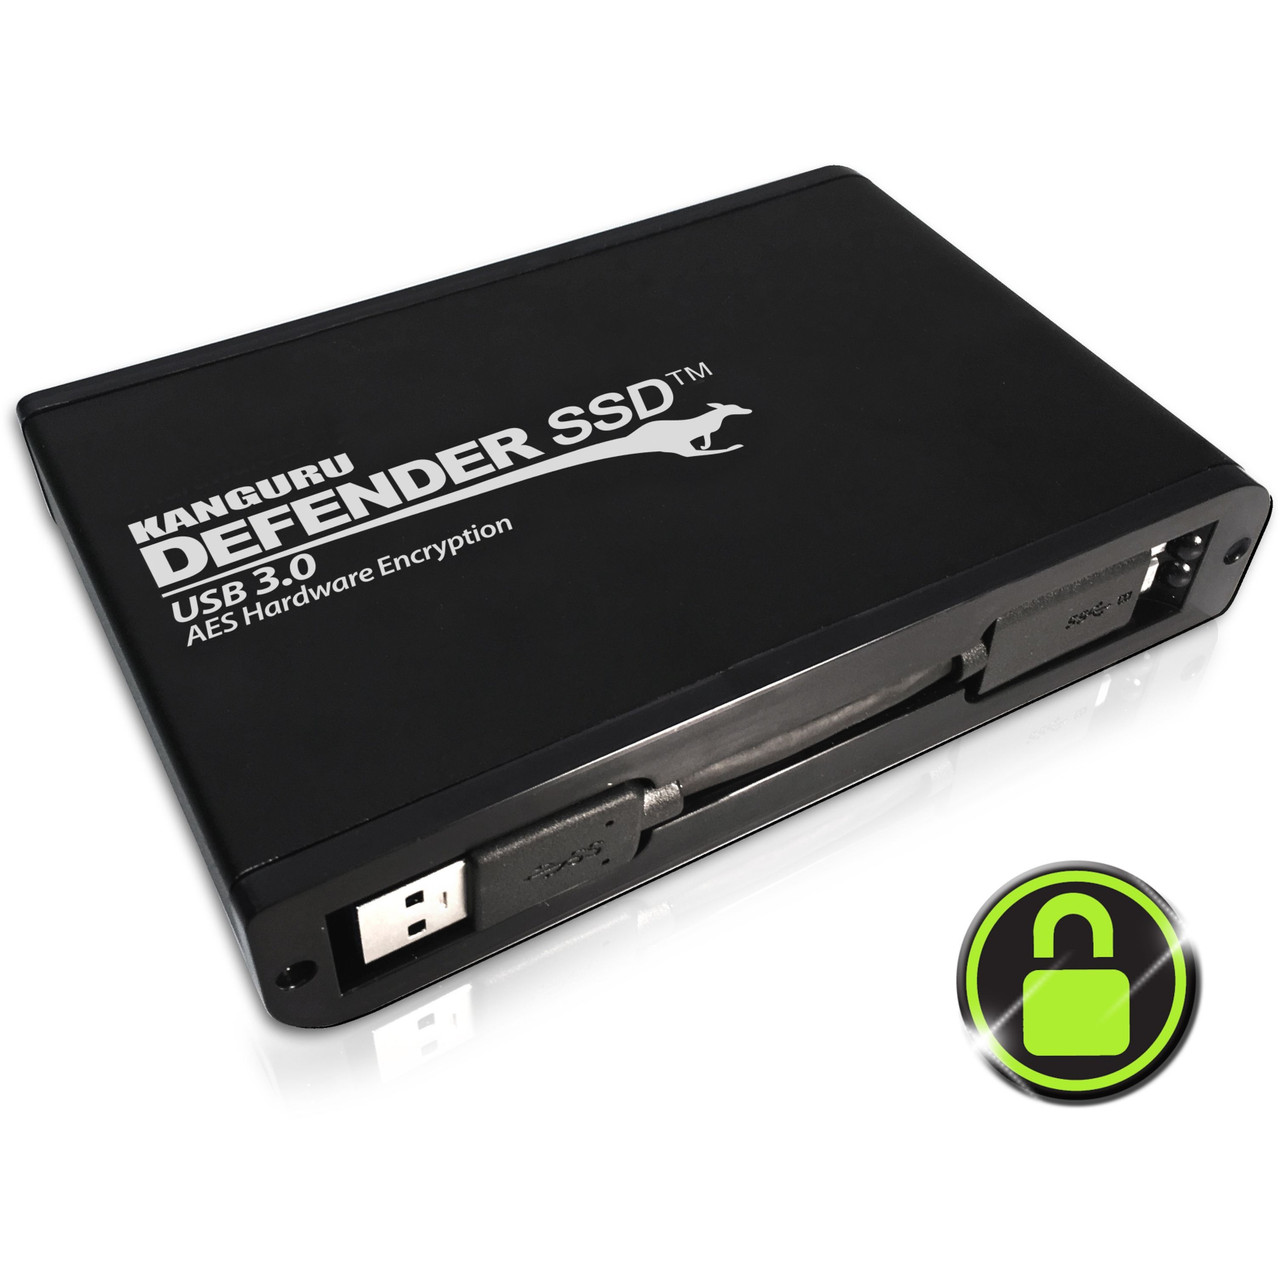 Kanguru Solutions Defender SSD 35 AES 256-Bit Hardware